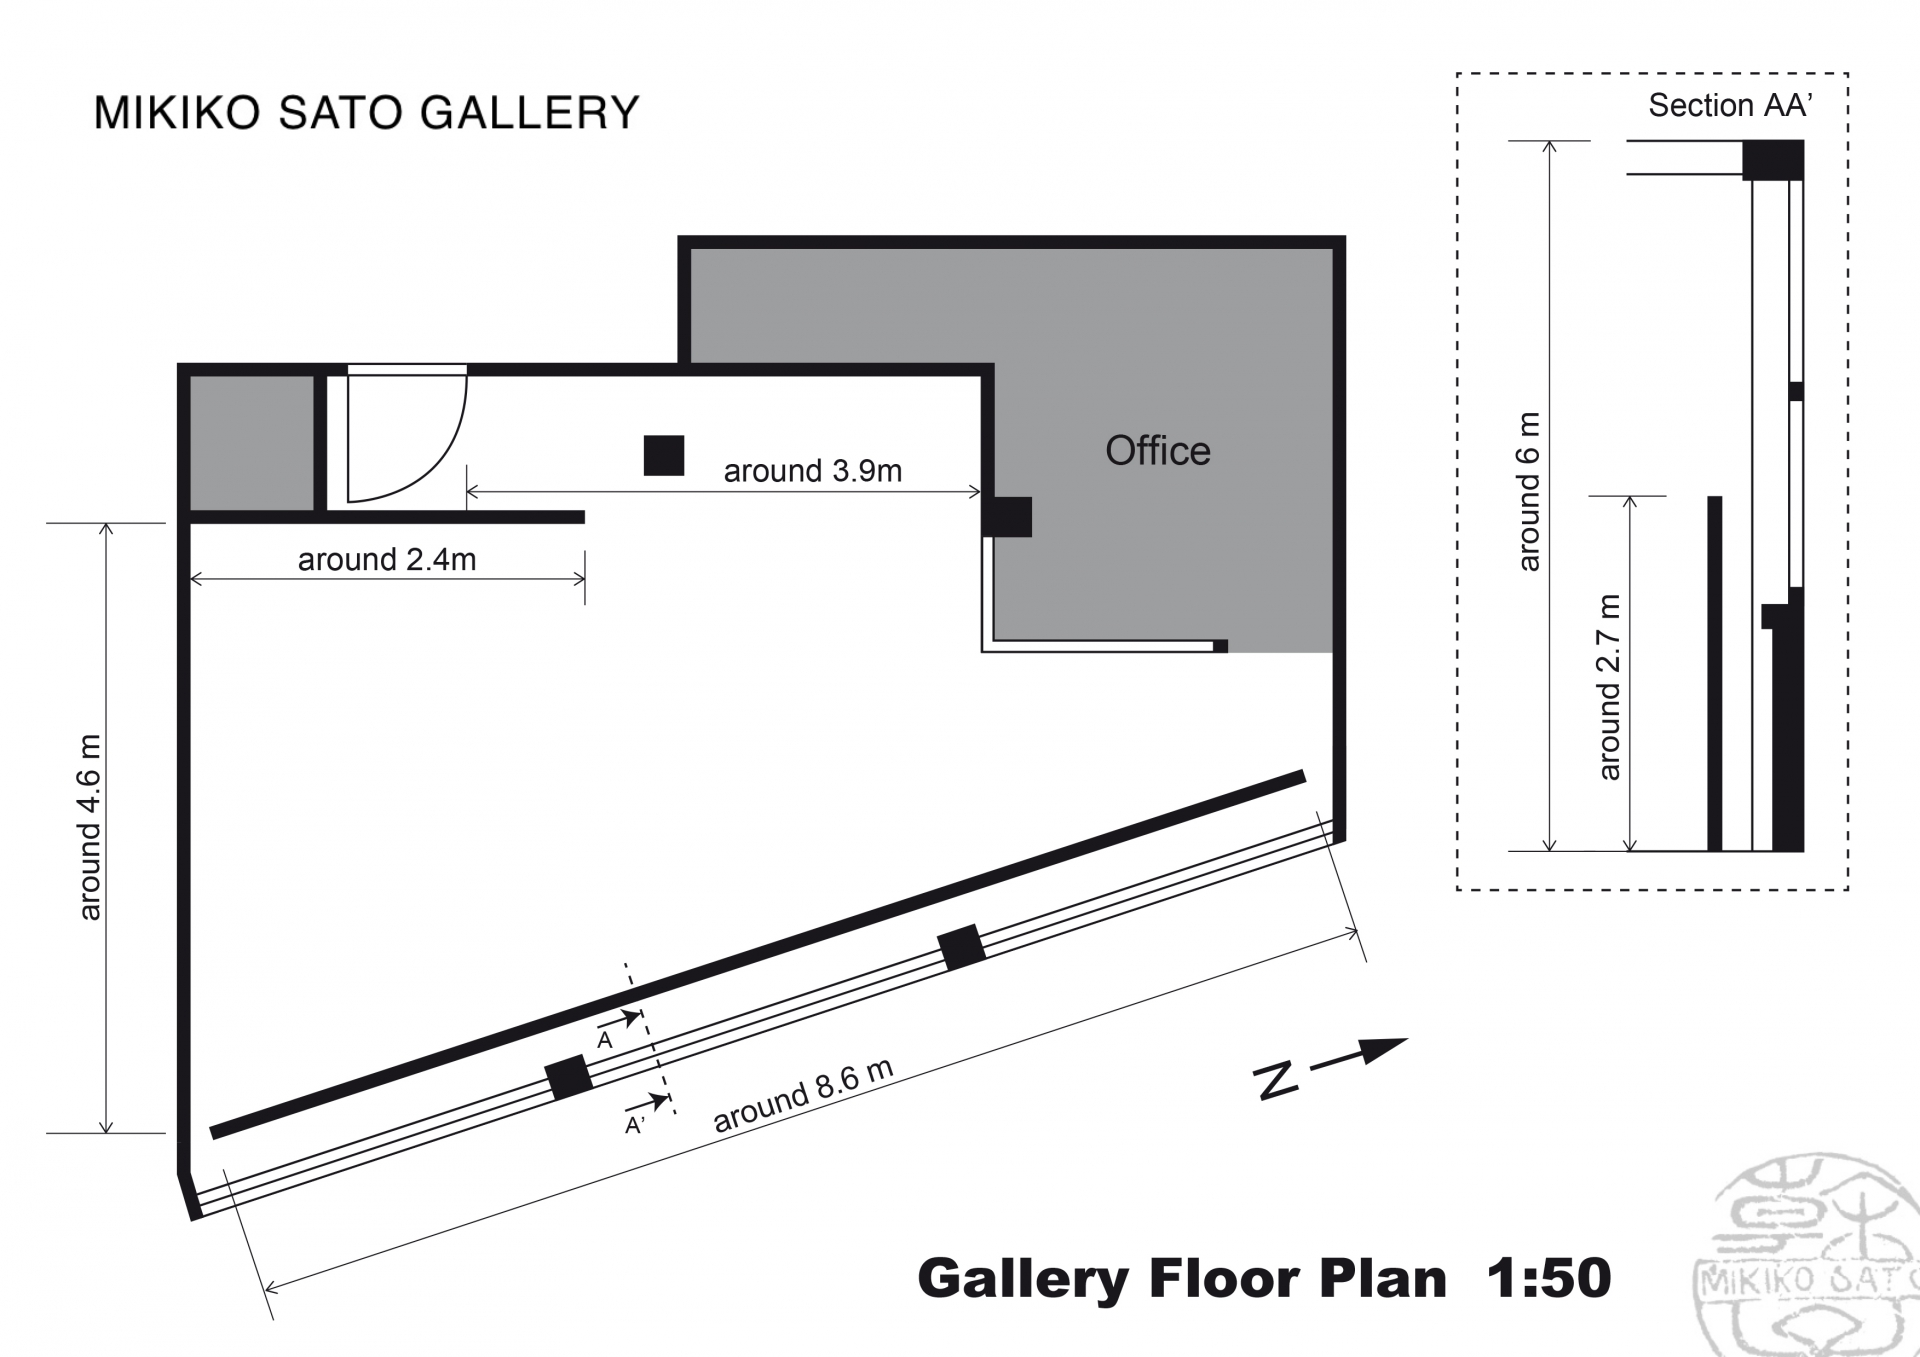 Mikiko Sato Gallery